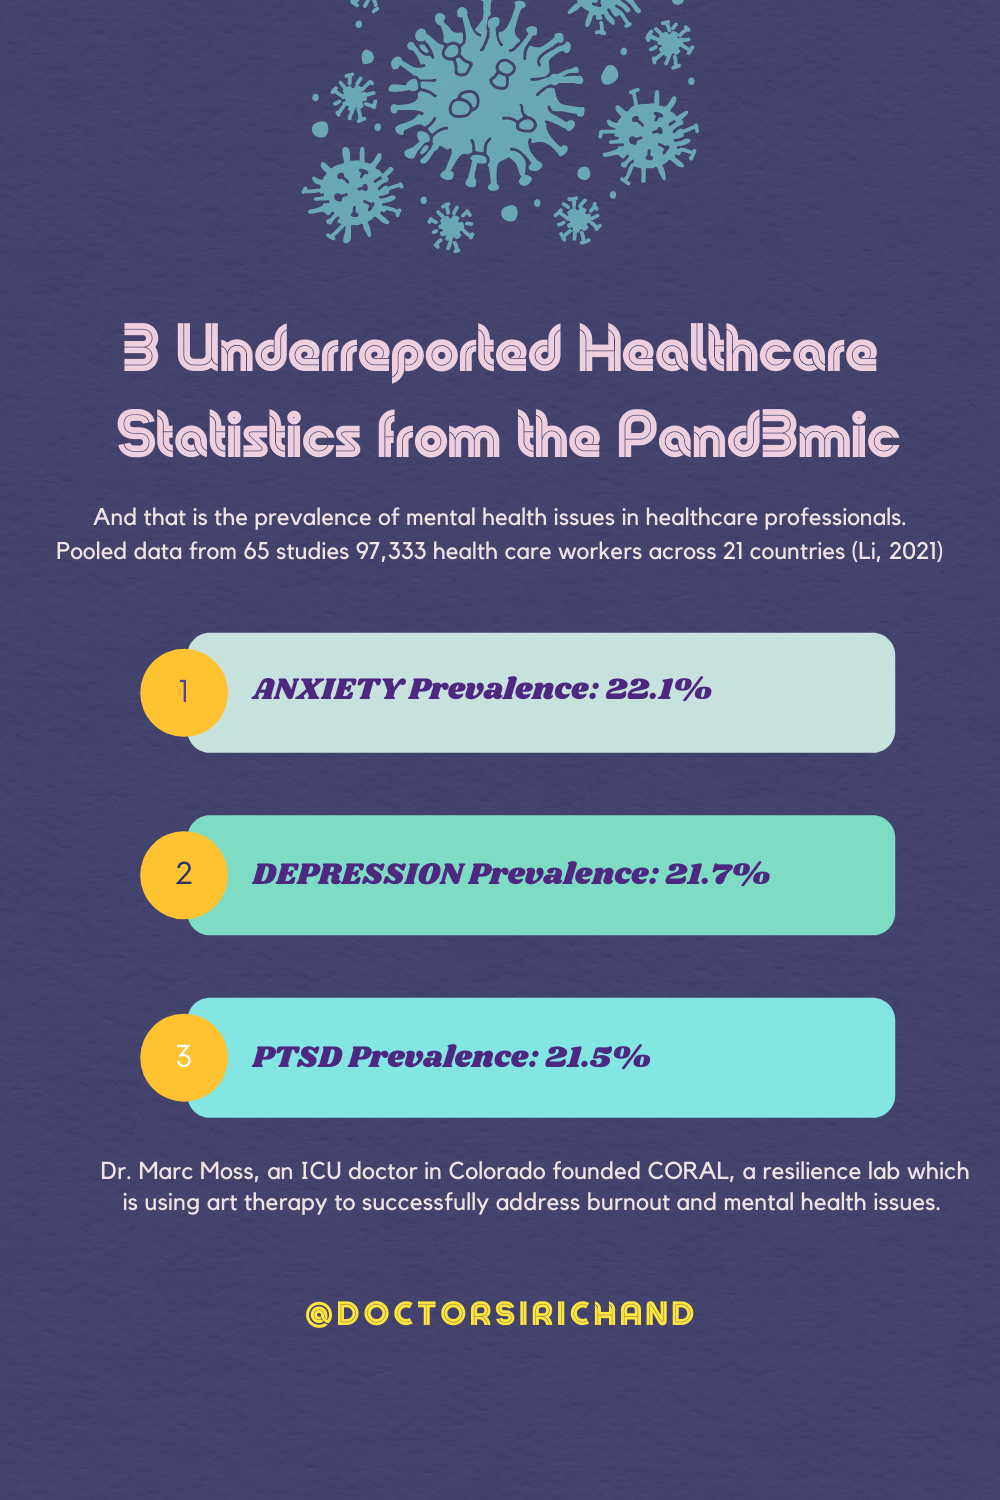 3 Underreported Healthcare Statistics